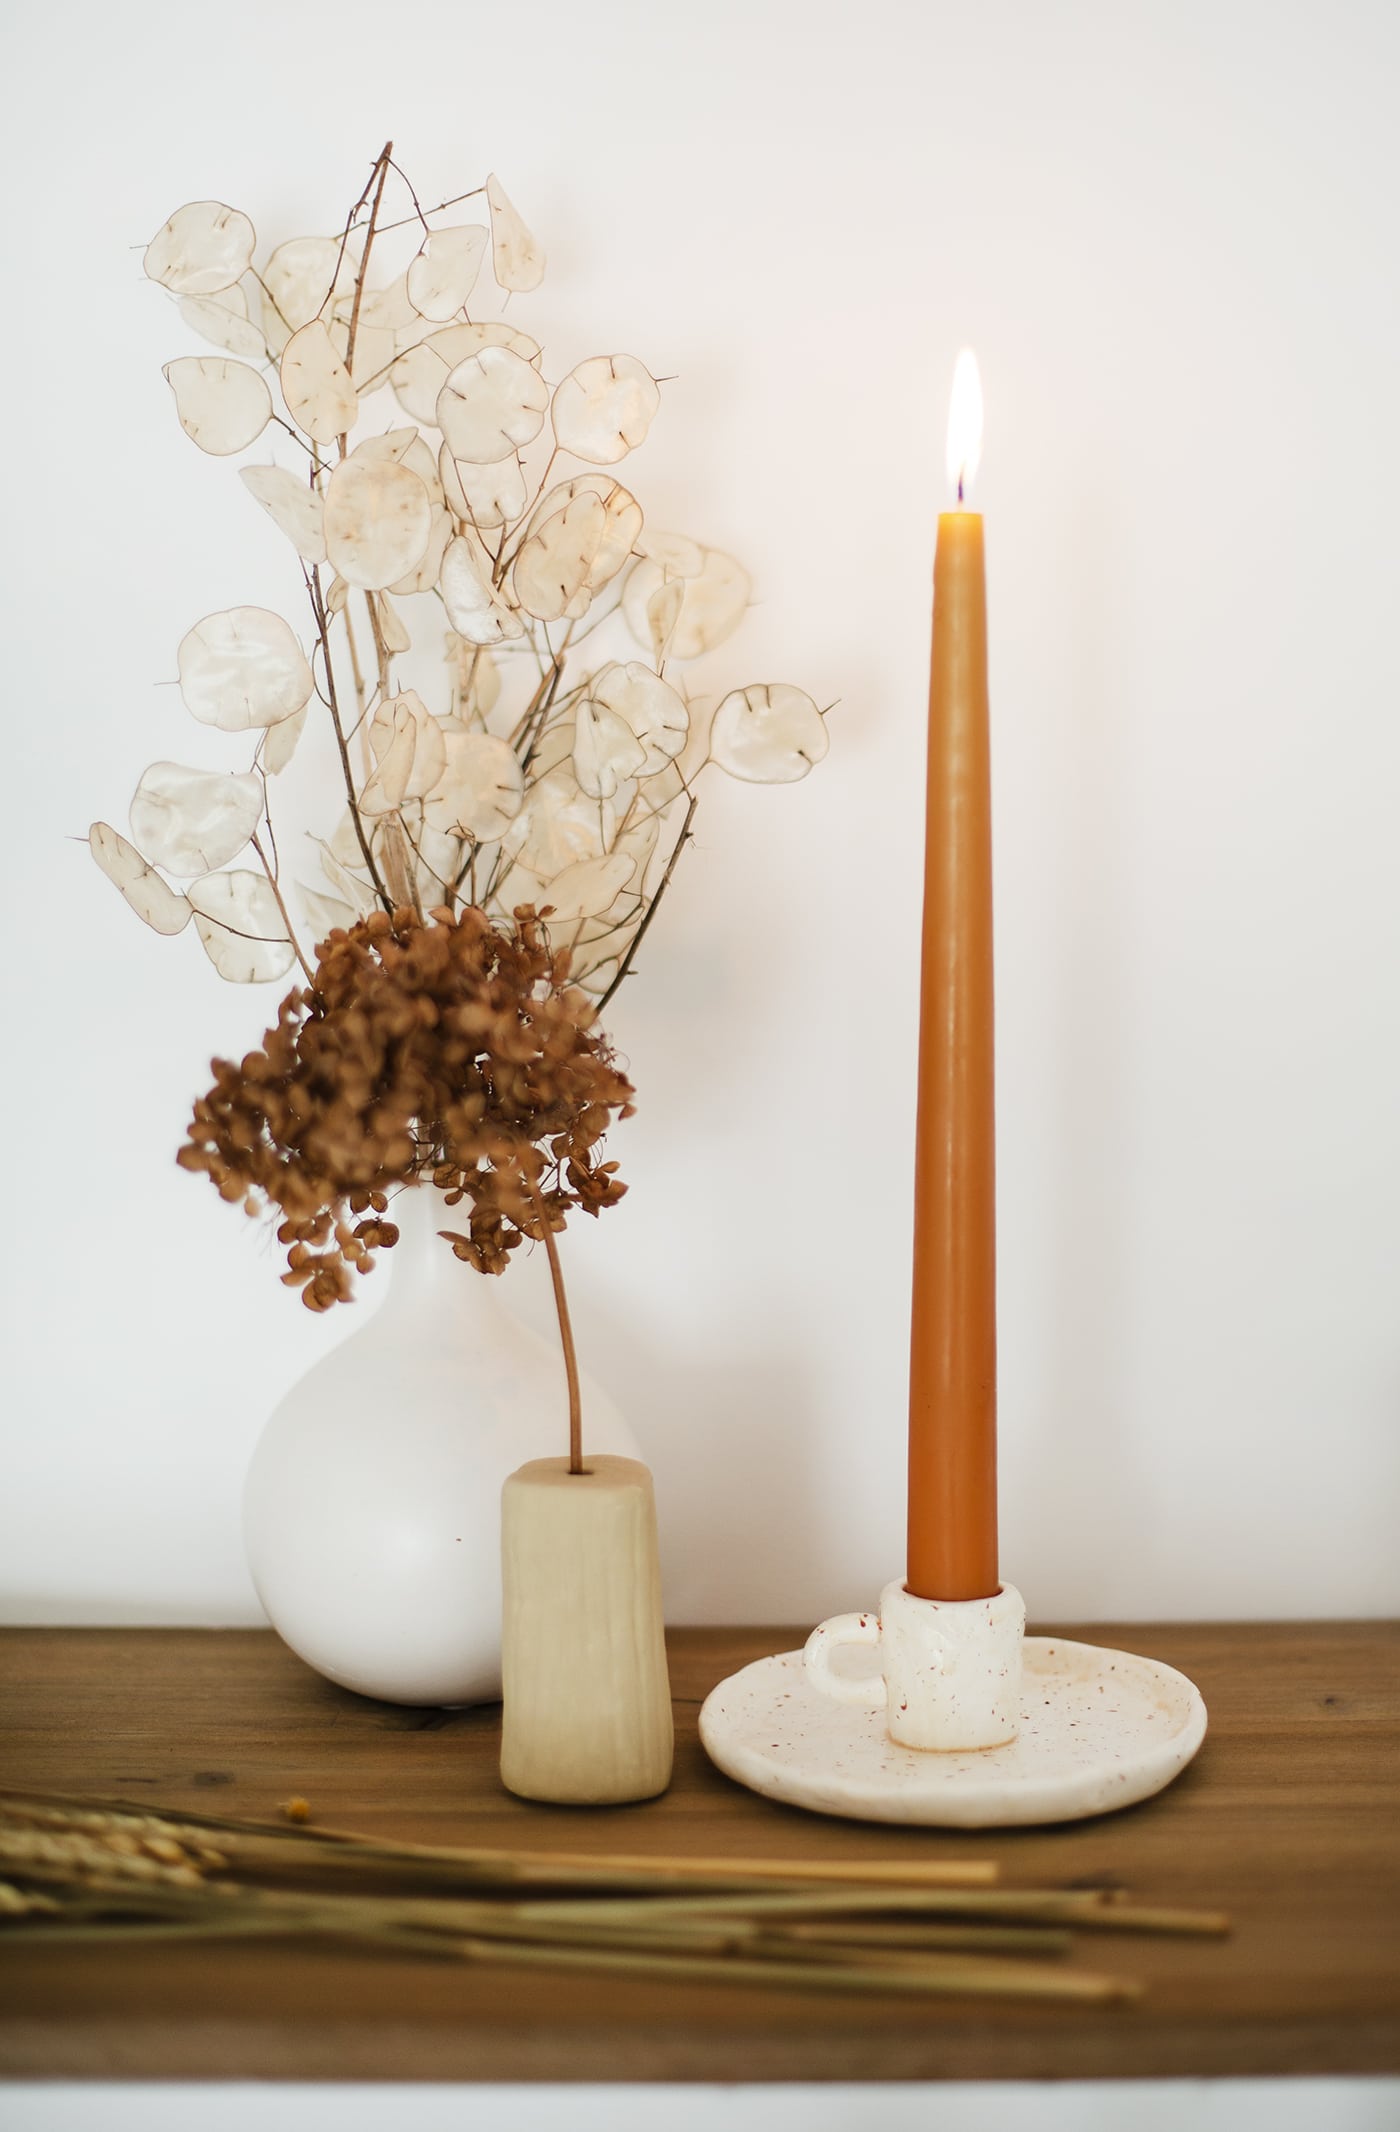 DIY Ceramic-look candleholders